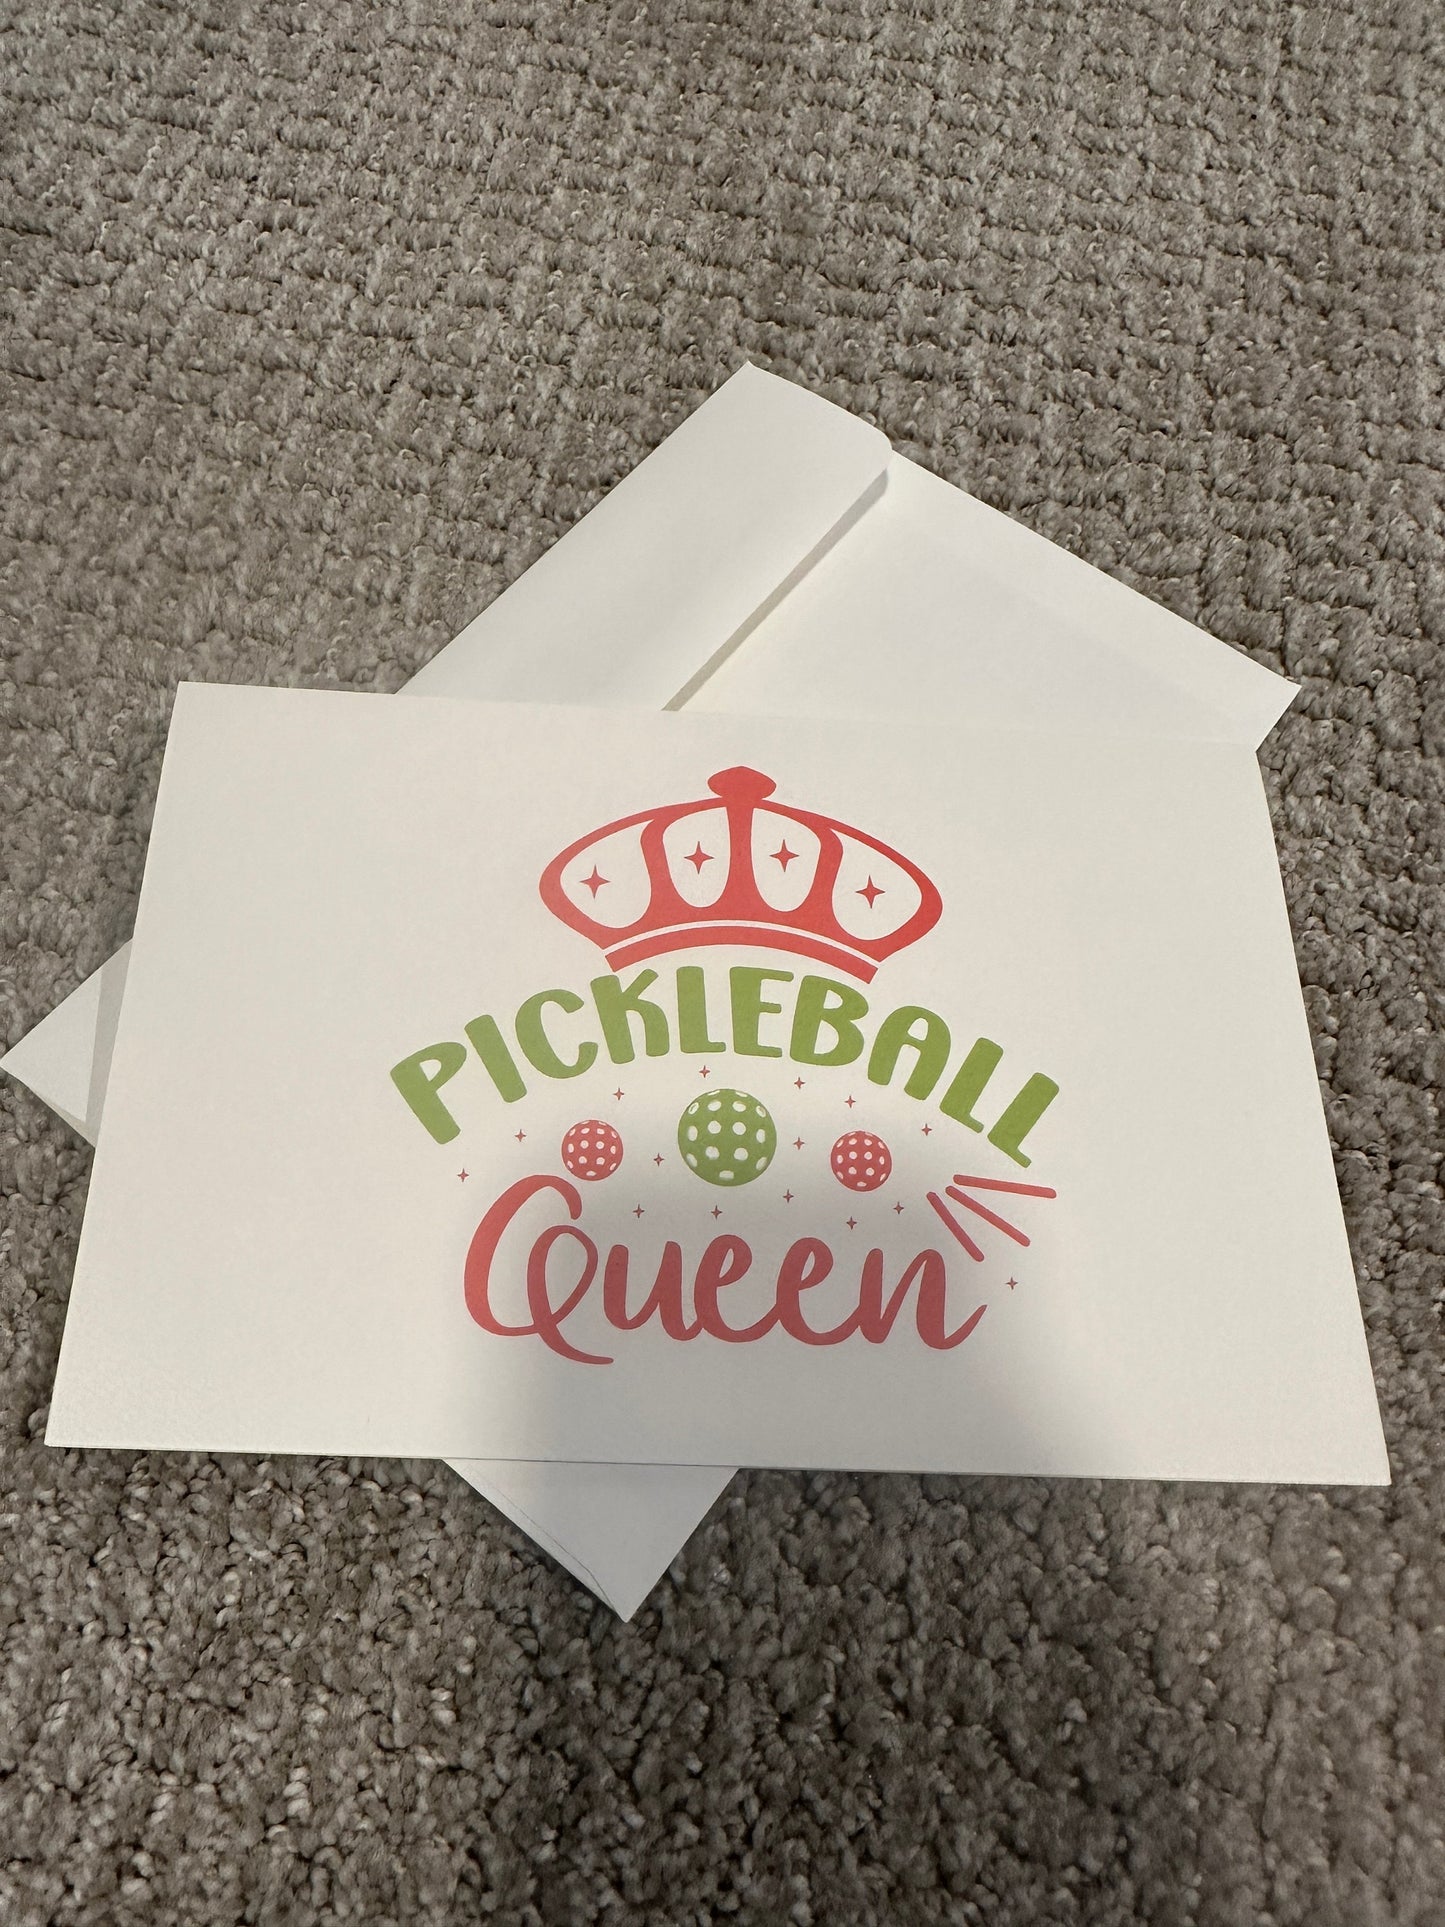 Pickleball Birthday Card ~ Pickleball Gifts for Men ~ Pickleball Gifts for Women Pickleball Cards Funny Birthday ~ Pickle Ball Gifts for Him